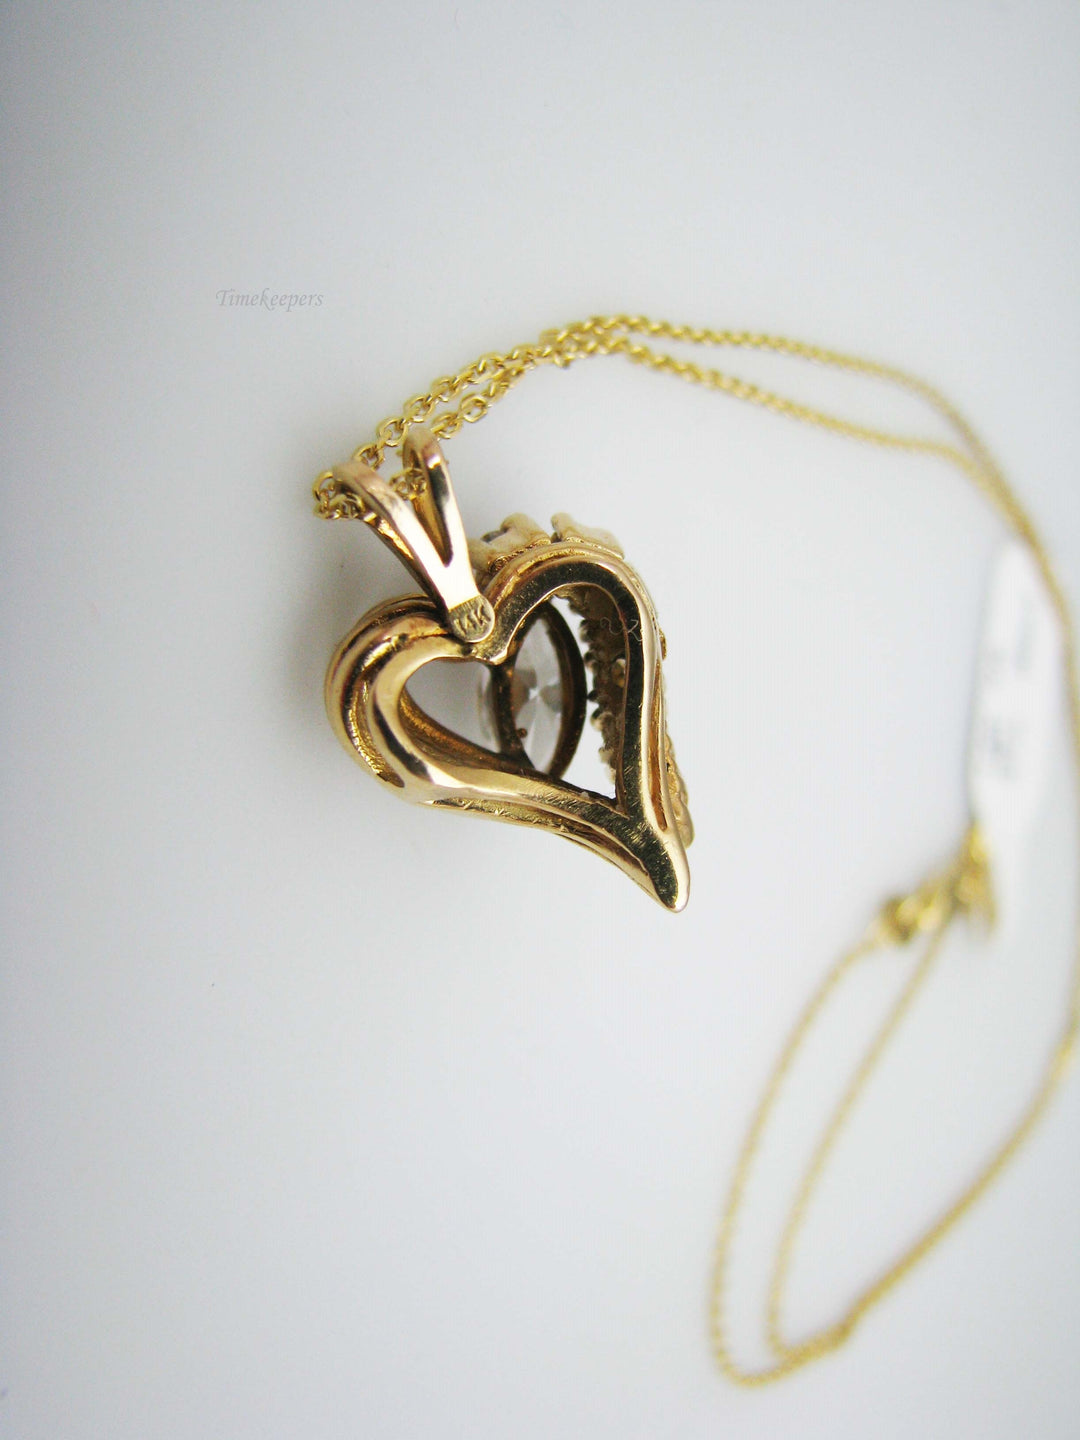 b161 Stunning 14k Diamond Heart pendant with chain